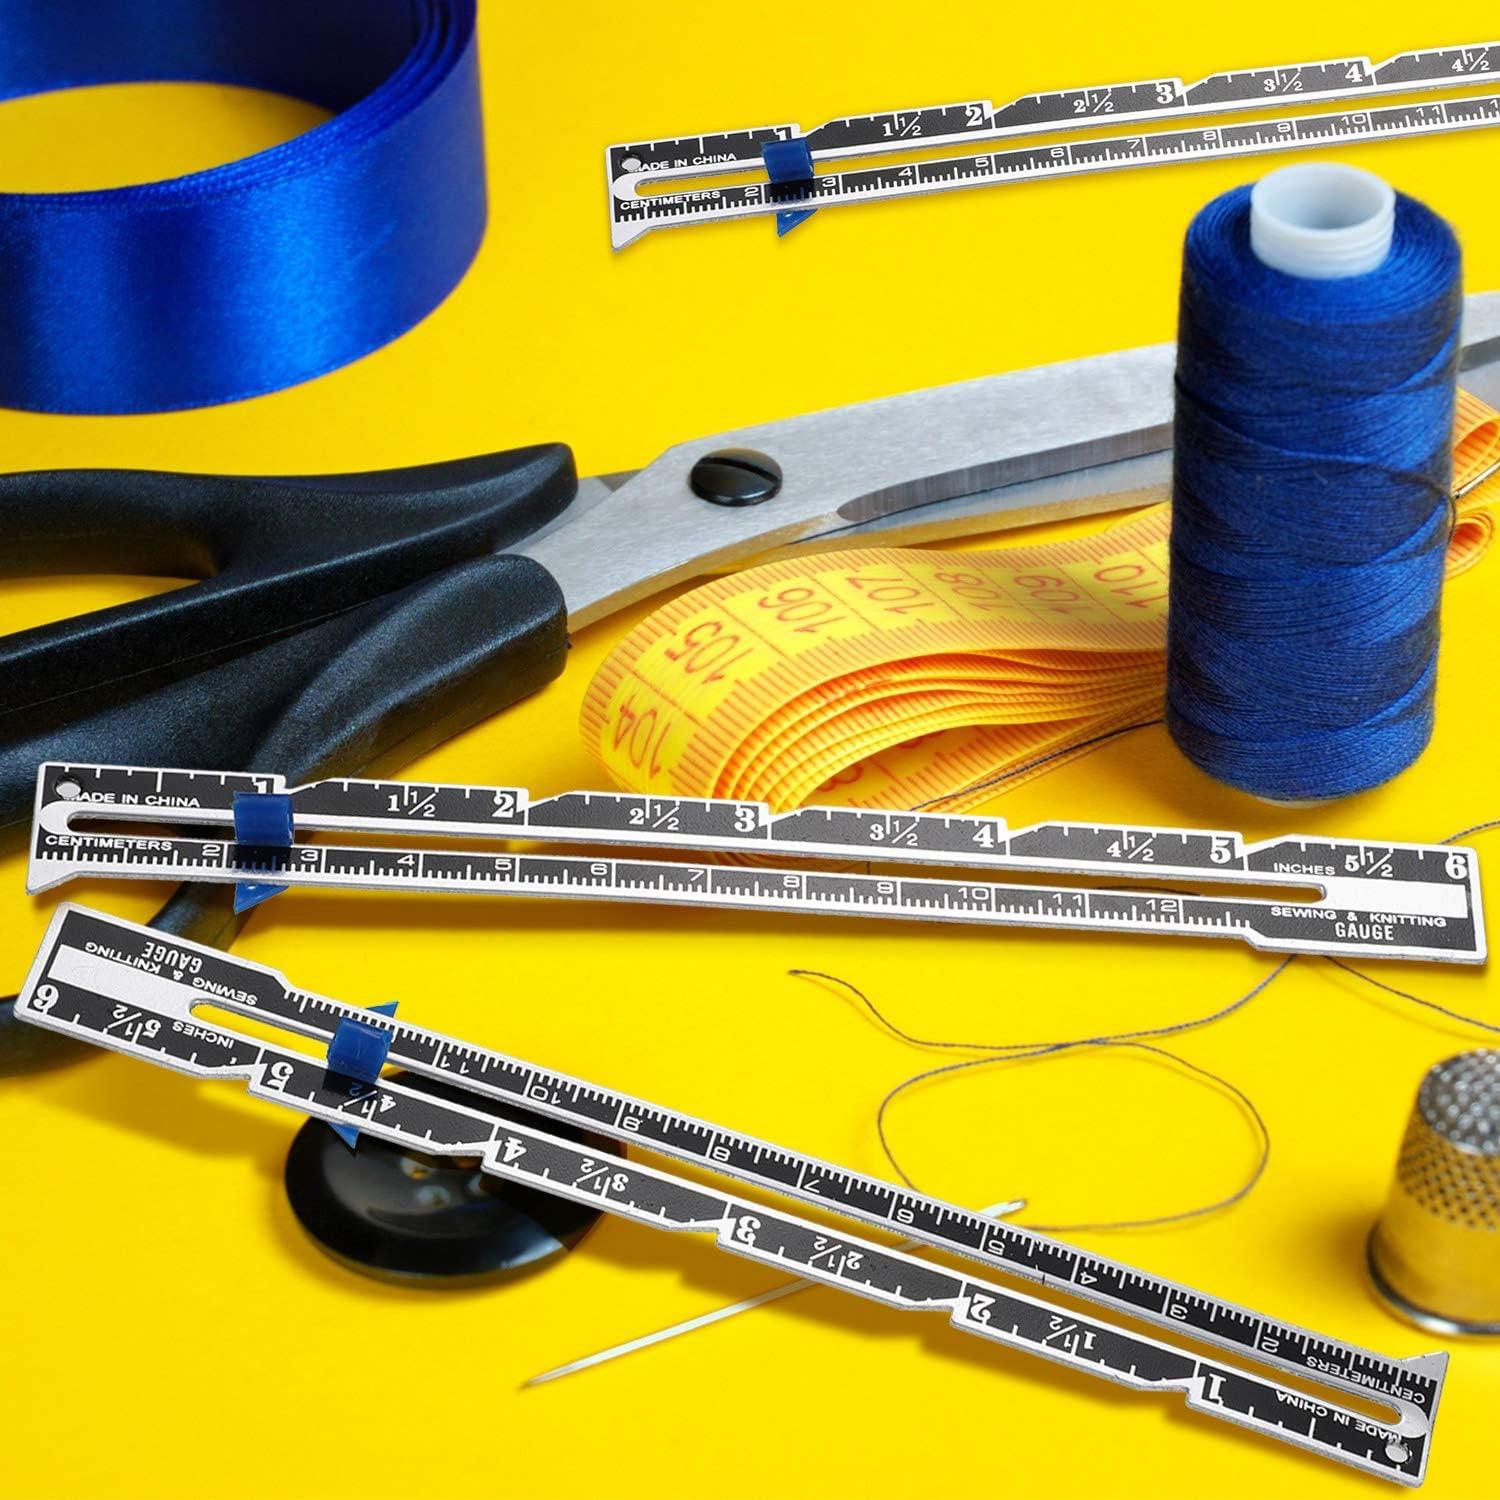 3 Pieces Sewing Gauge Sewing Measuring Tool Metal Sliding Gauge Fabric  Quilting Ruler Seam Measuring Gauge for DIY Fabric Crafts Quilting Knitting